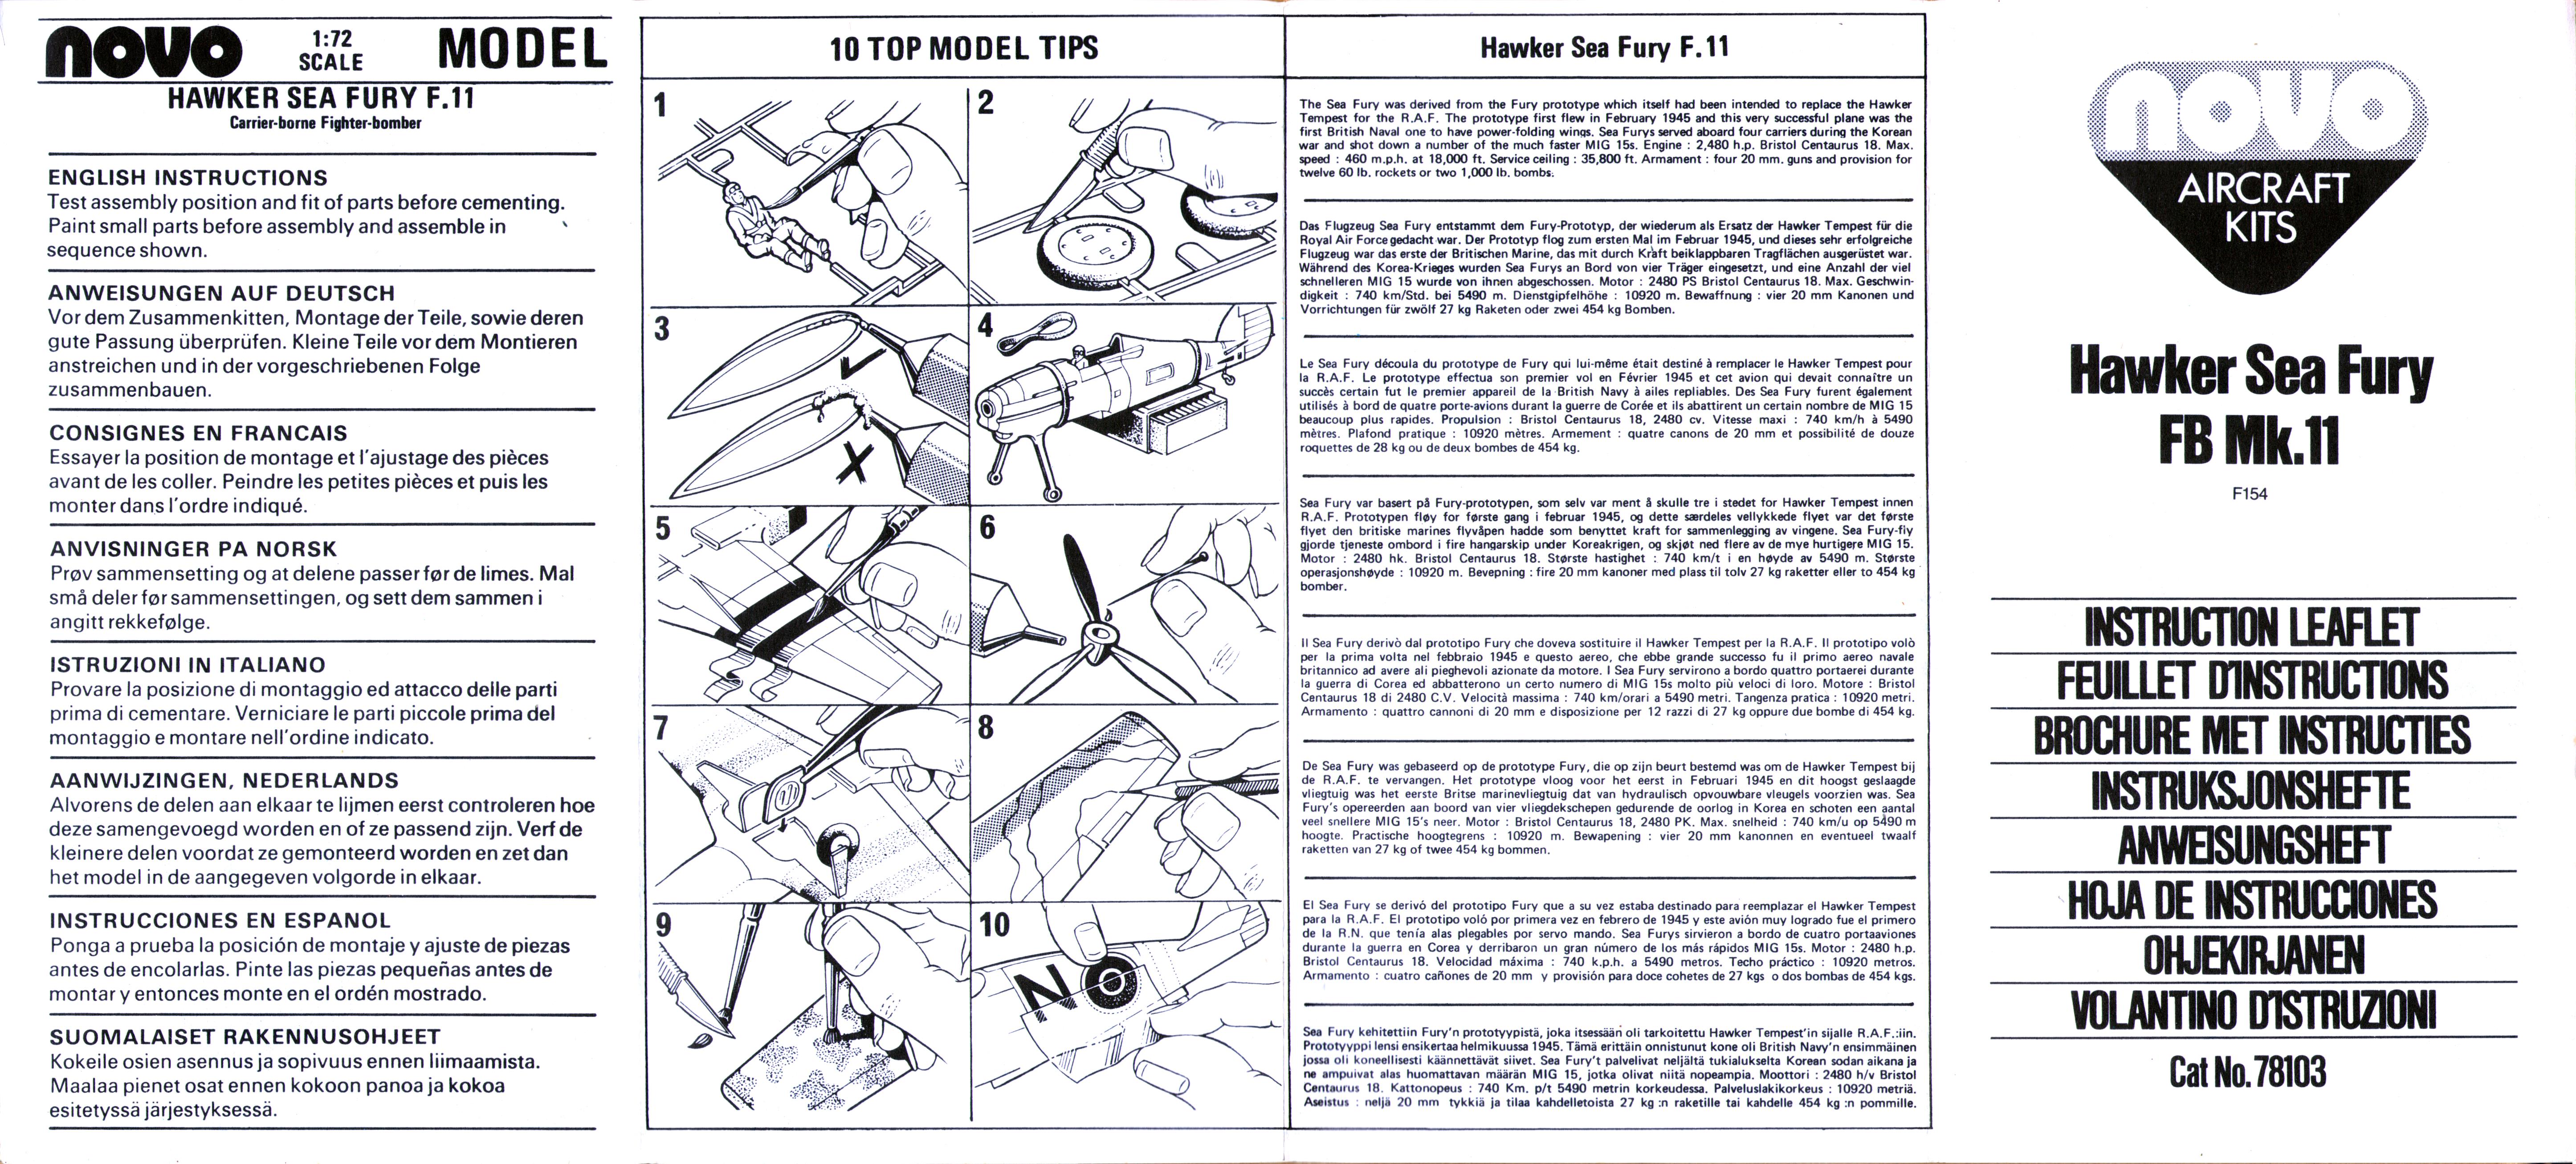  Инструкция по сборке NOVO Toys Ltd F154 Hawker Sea Fury, 1980